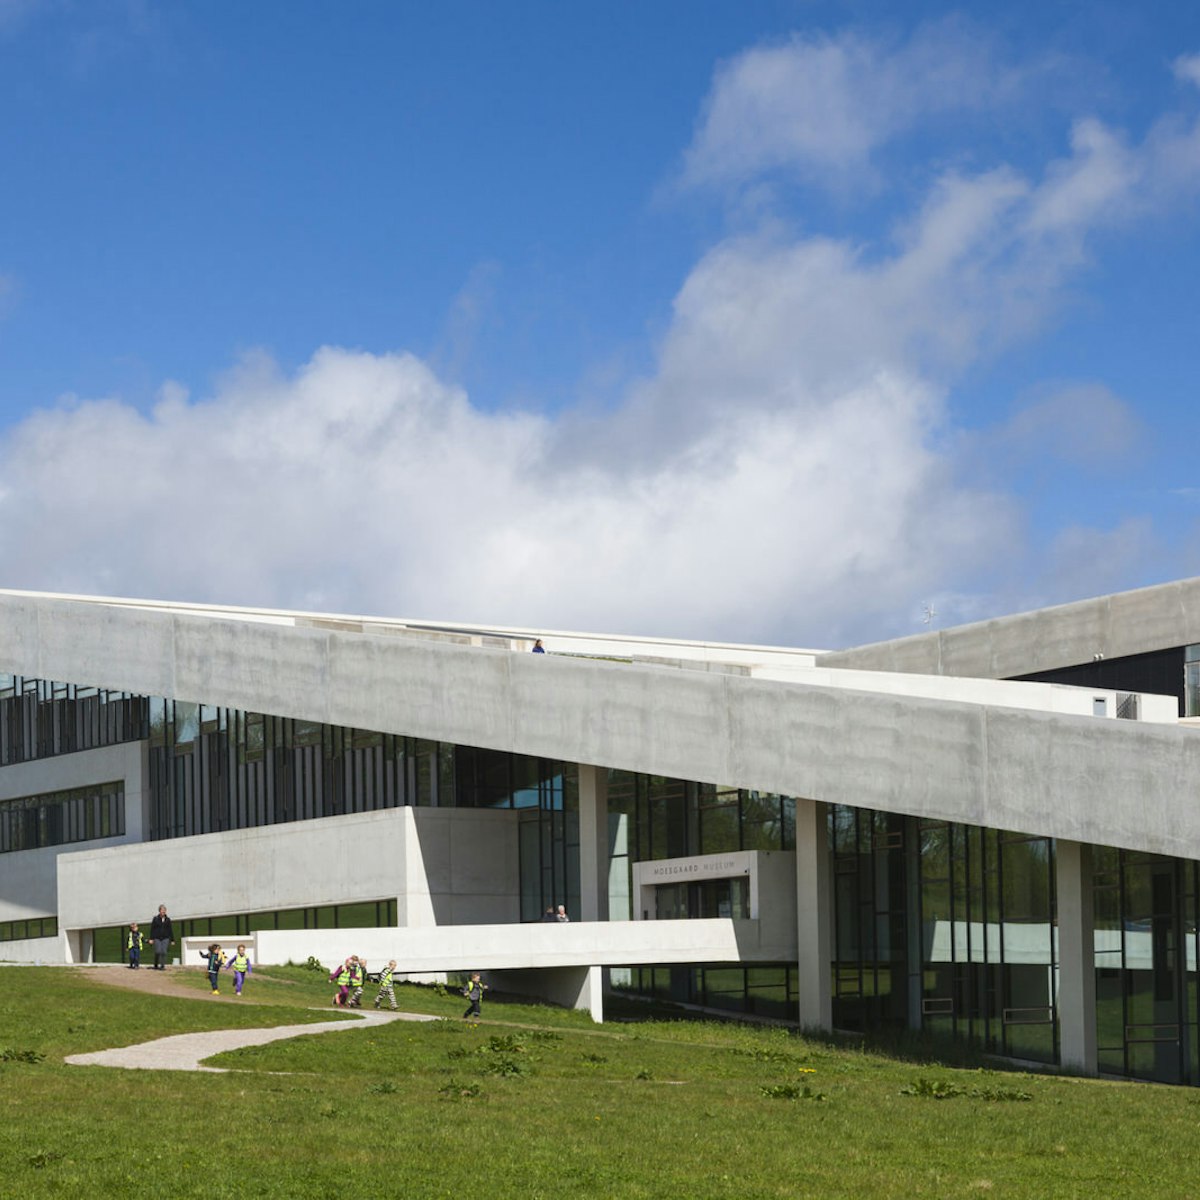 Denmark, Jutland, Aarhus-Hojbjerg, Moesgard Museum, new exhibition buildling designed by Henning Larsen, exterior and roof